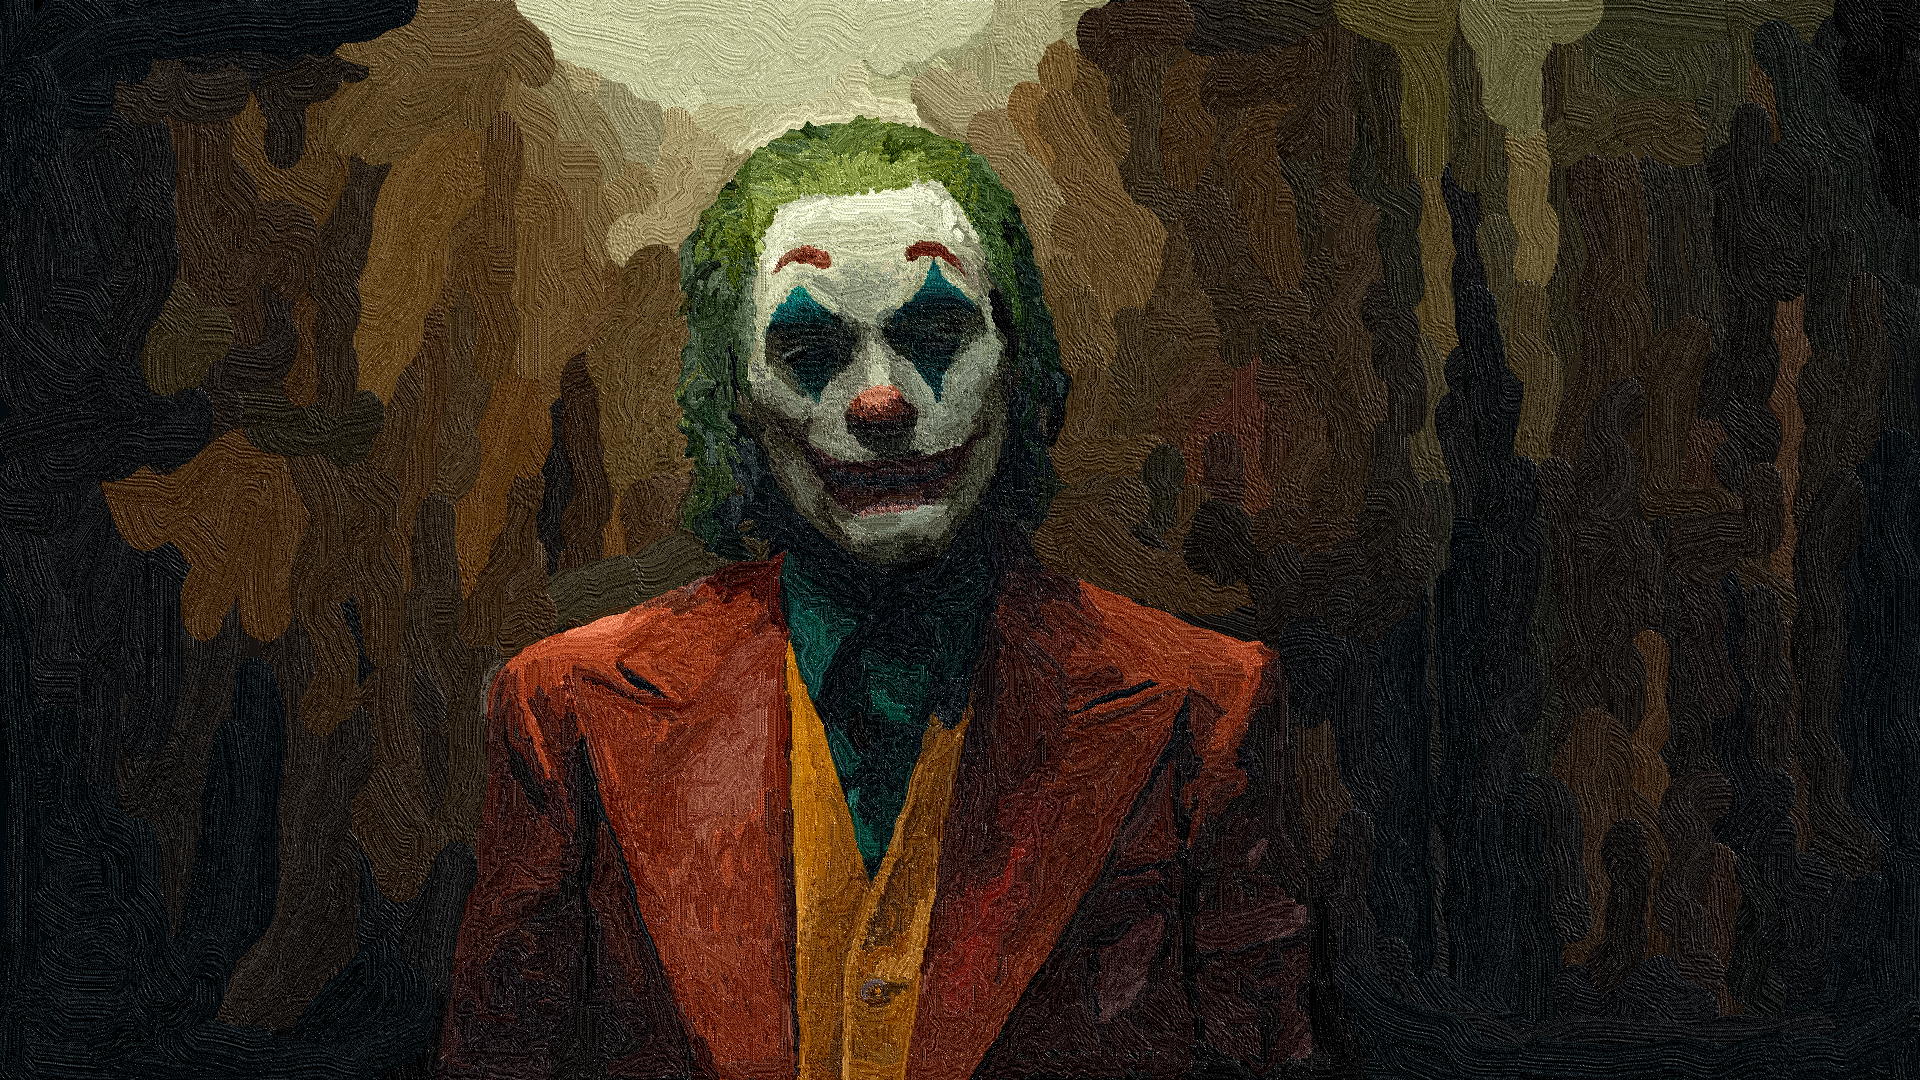 General 1920x1080 Joker (2019 Movie) paint brushes 2019 (year) movies artwork Joaquin Phoenix actor DC Comics villains